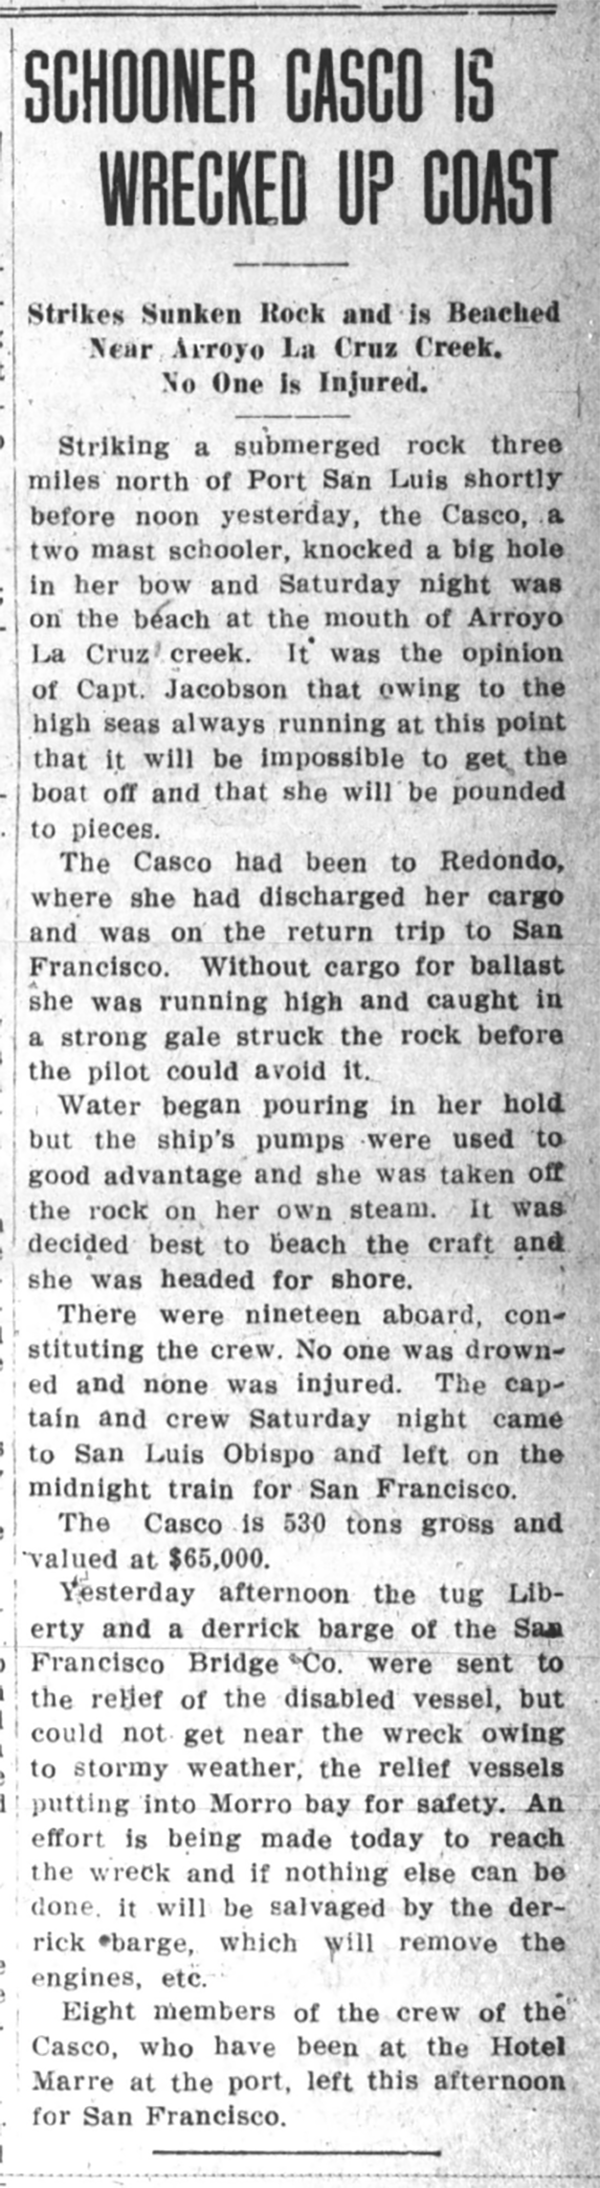 Newspaper clipping from Daily Telegram 30JUN1913 p1 col6 shipwreck Casco